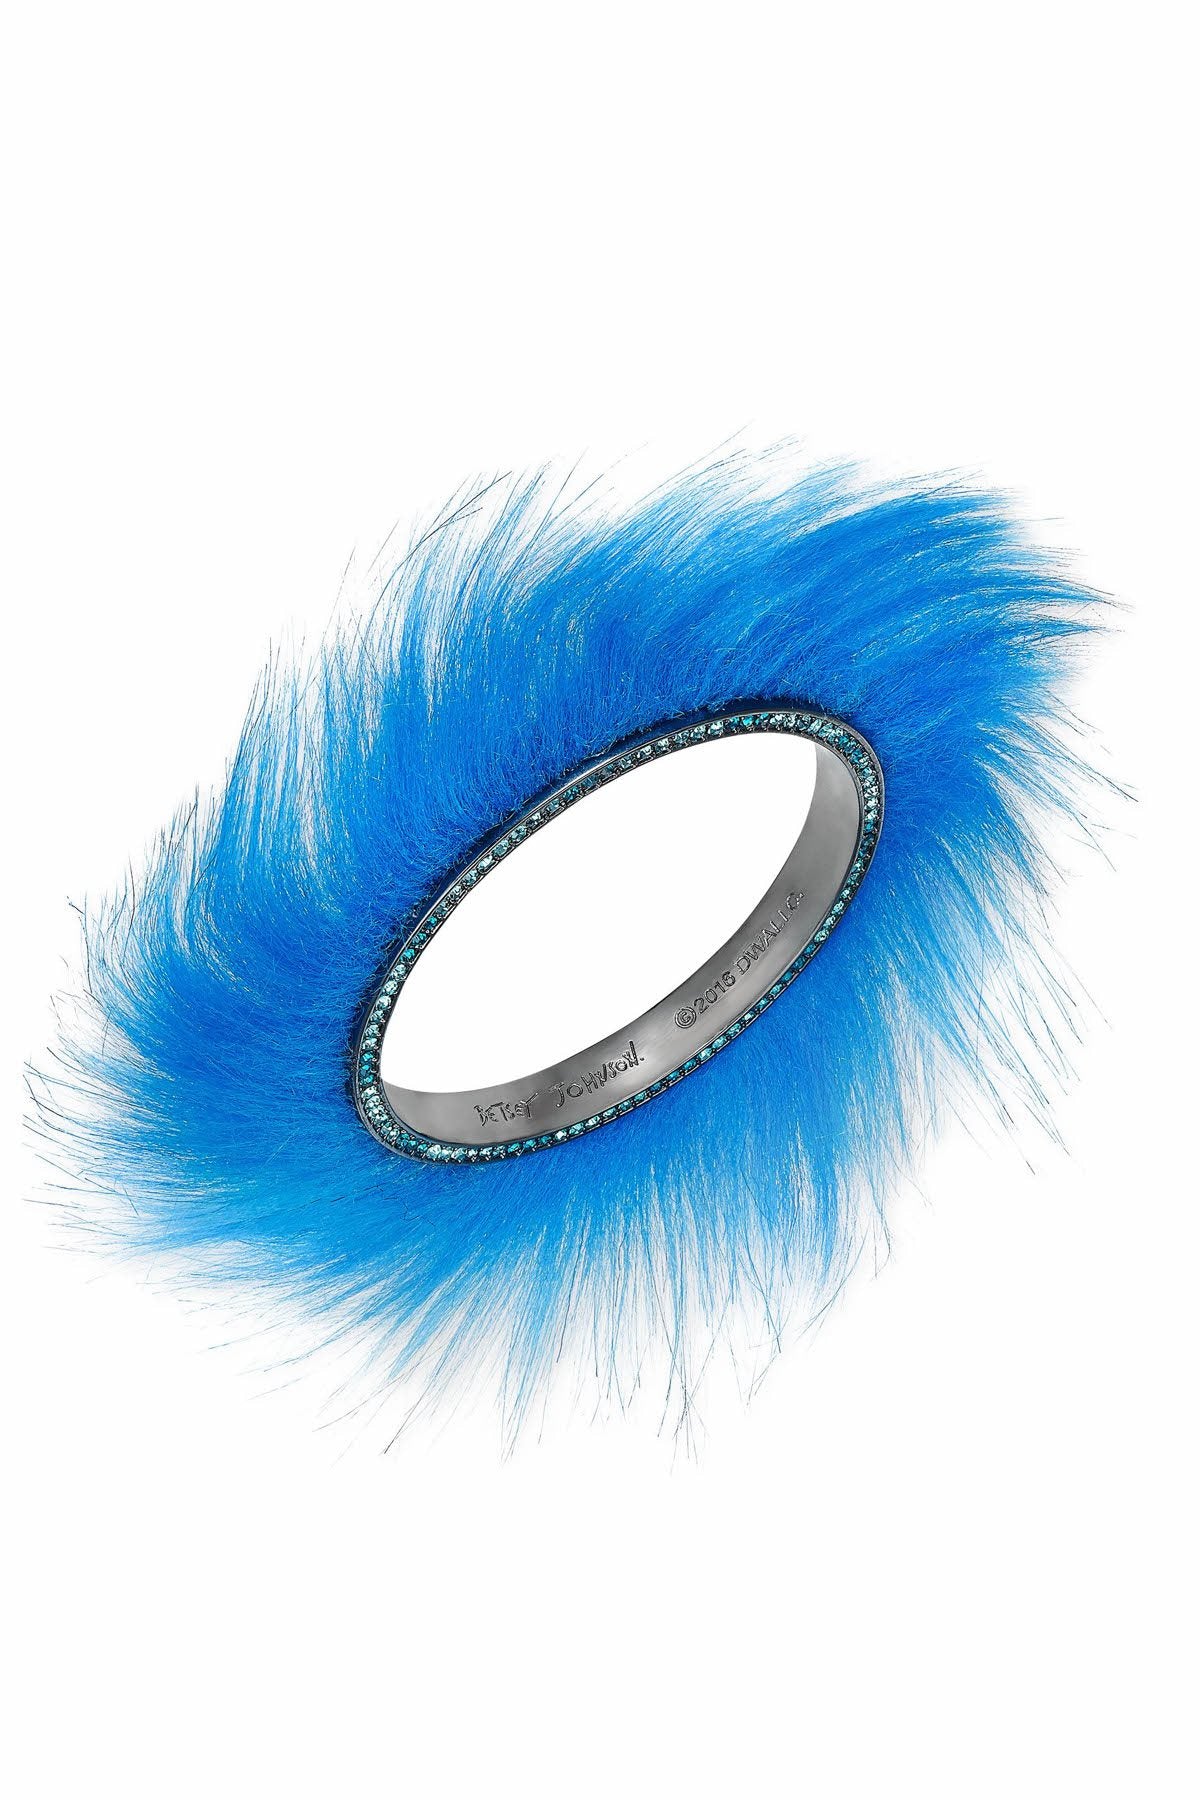 Betsey Johnson Blue Faux-Fur/Rhinestone Bangle Bracelet